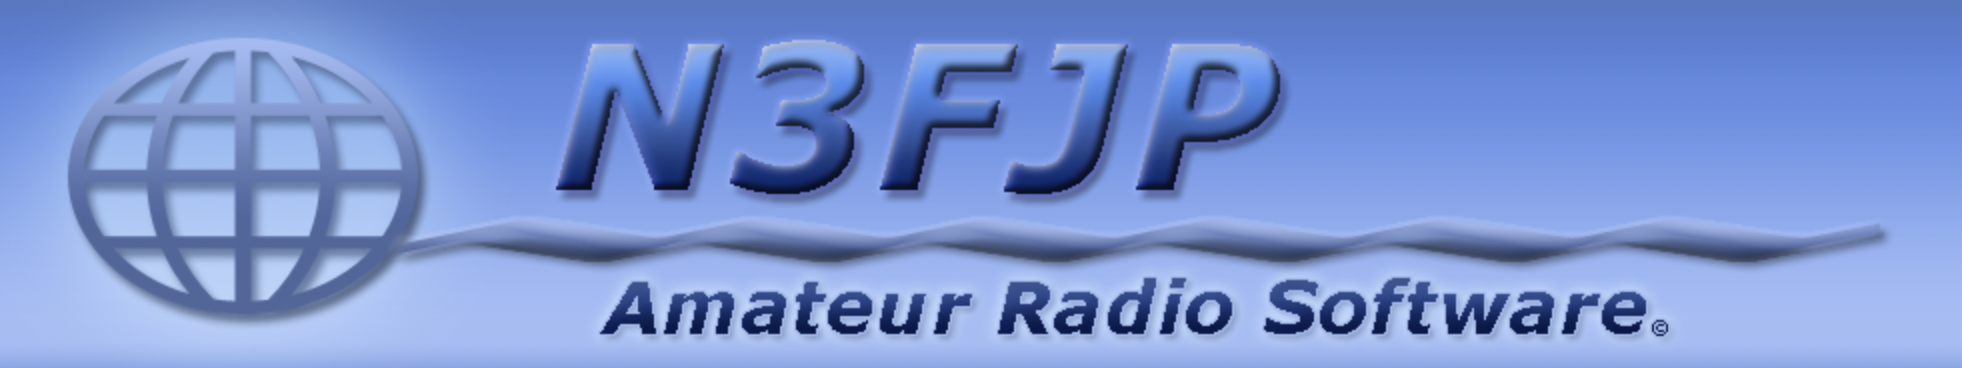 N3FJP logo